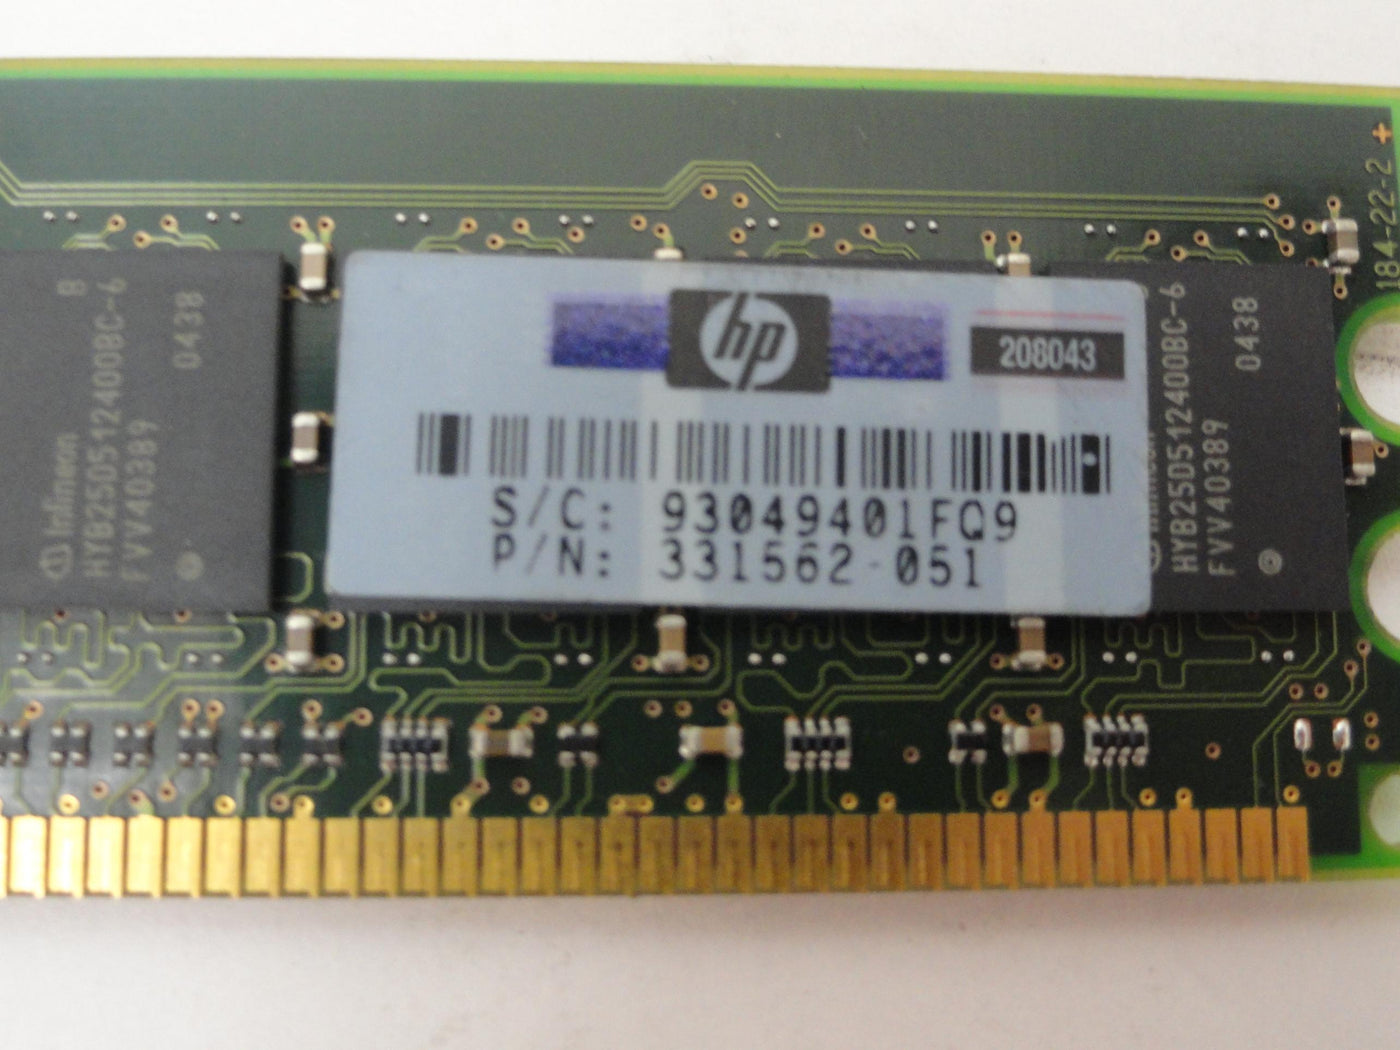 PR14069_PC2700R-25330-C0_HP/Infineon 1GBPC2700 DIMM 333Mhz DDR - Image2